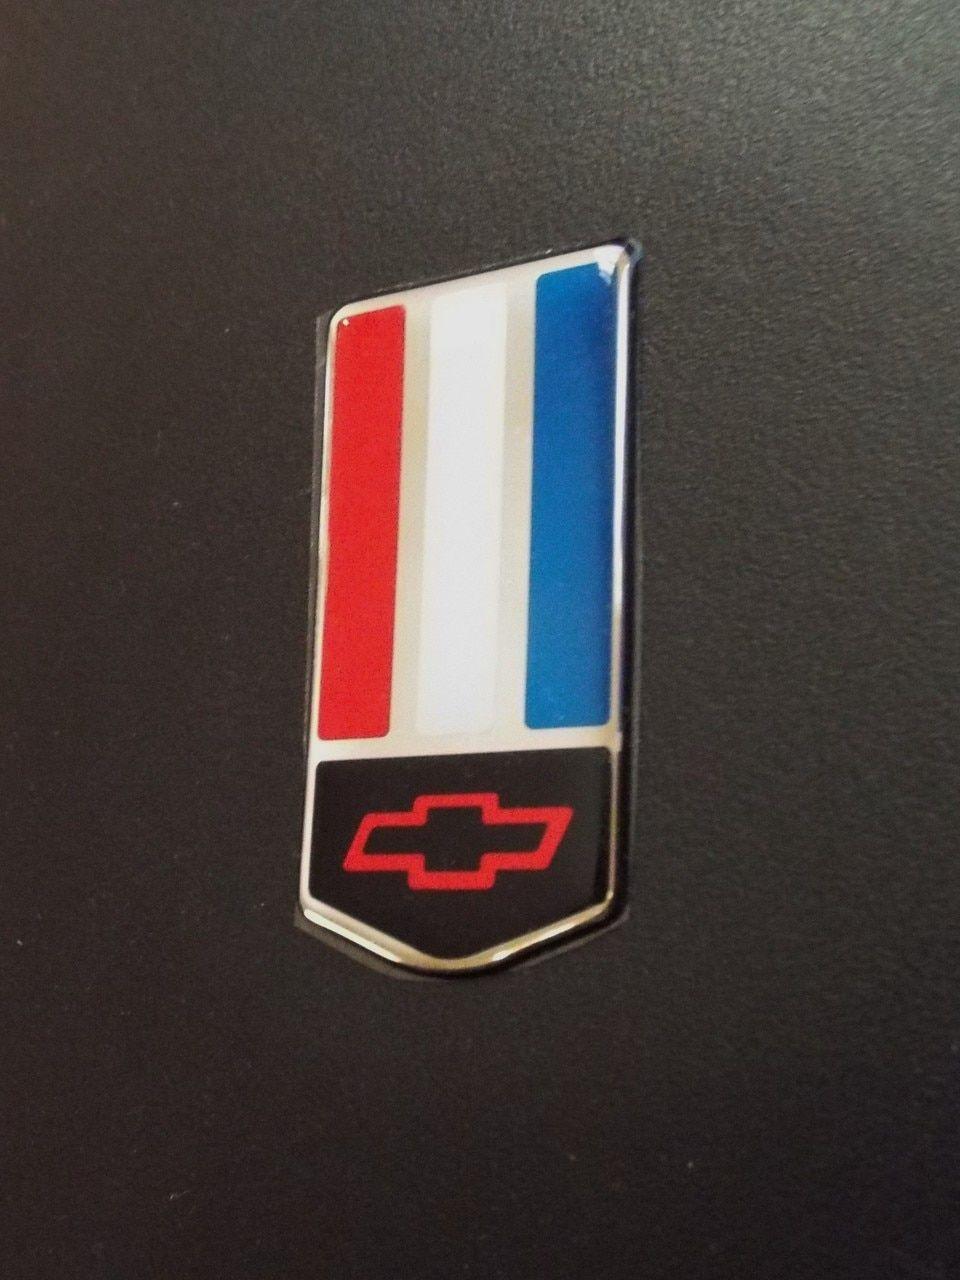 New Camaro Logo - New 1993 1994 1995 1996 1997 1998 1999 2000 2001 2002 Chevrolet